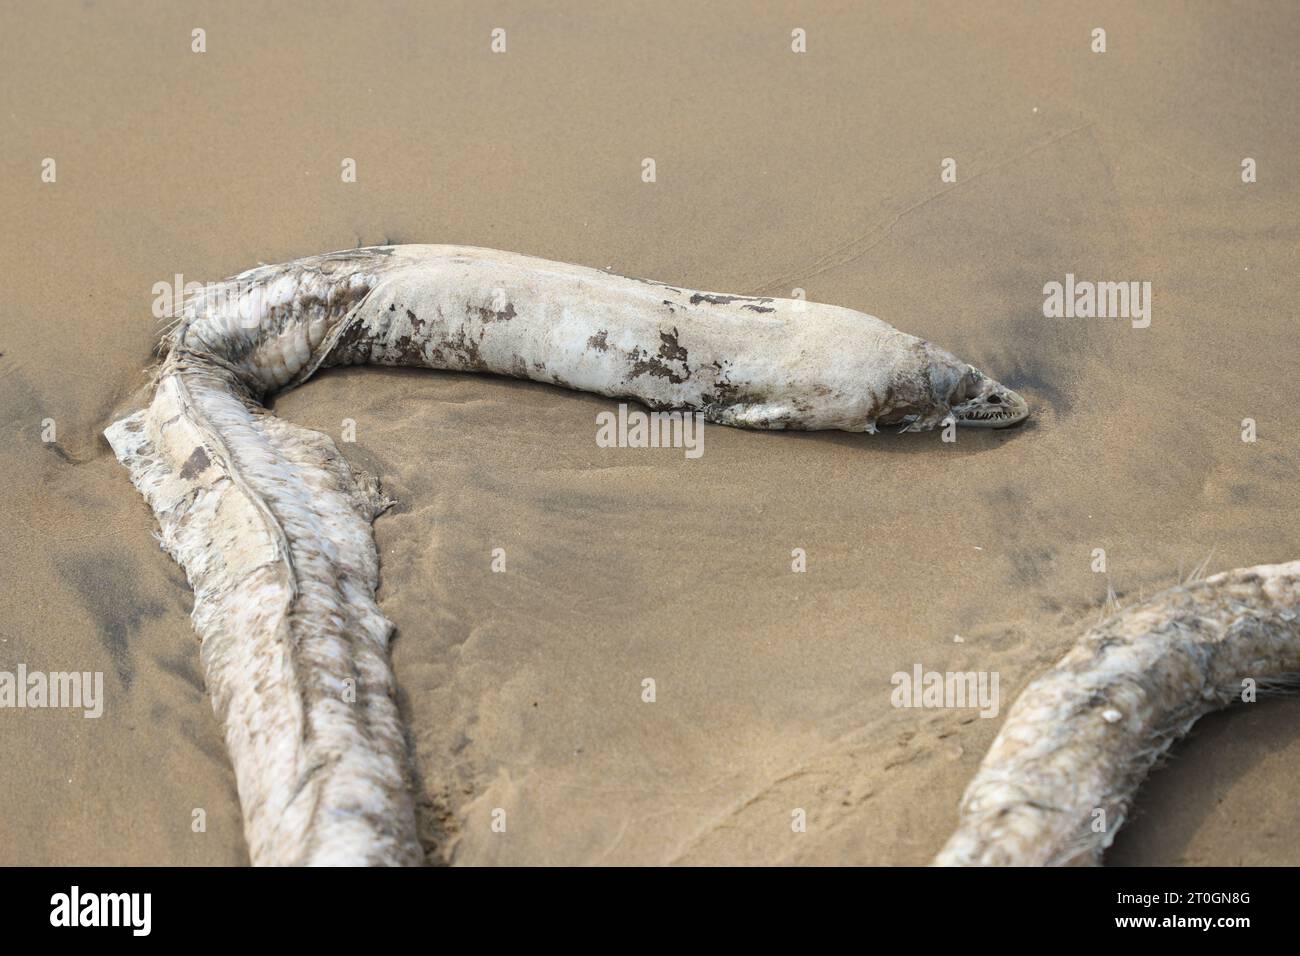 Sea Creature in decomposed state Stock Photo